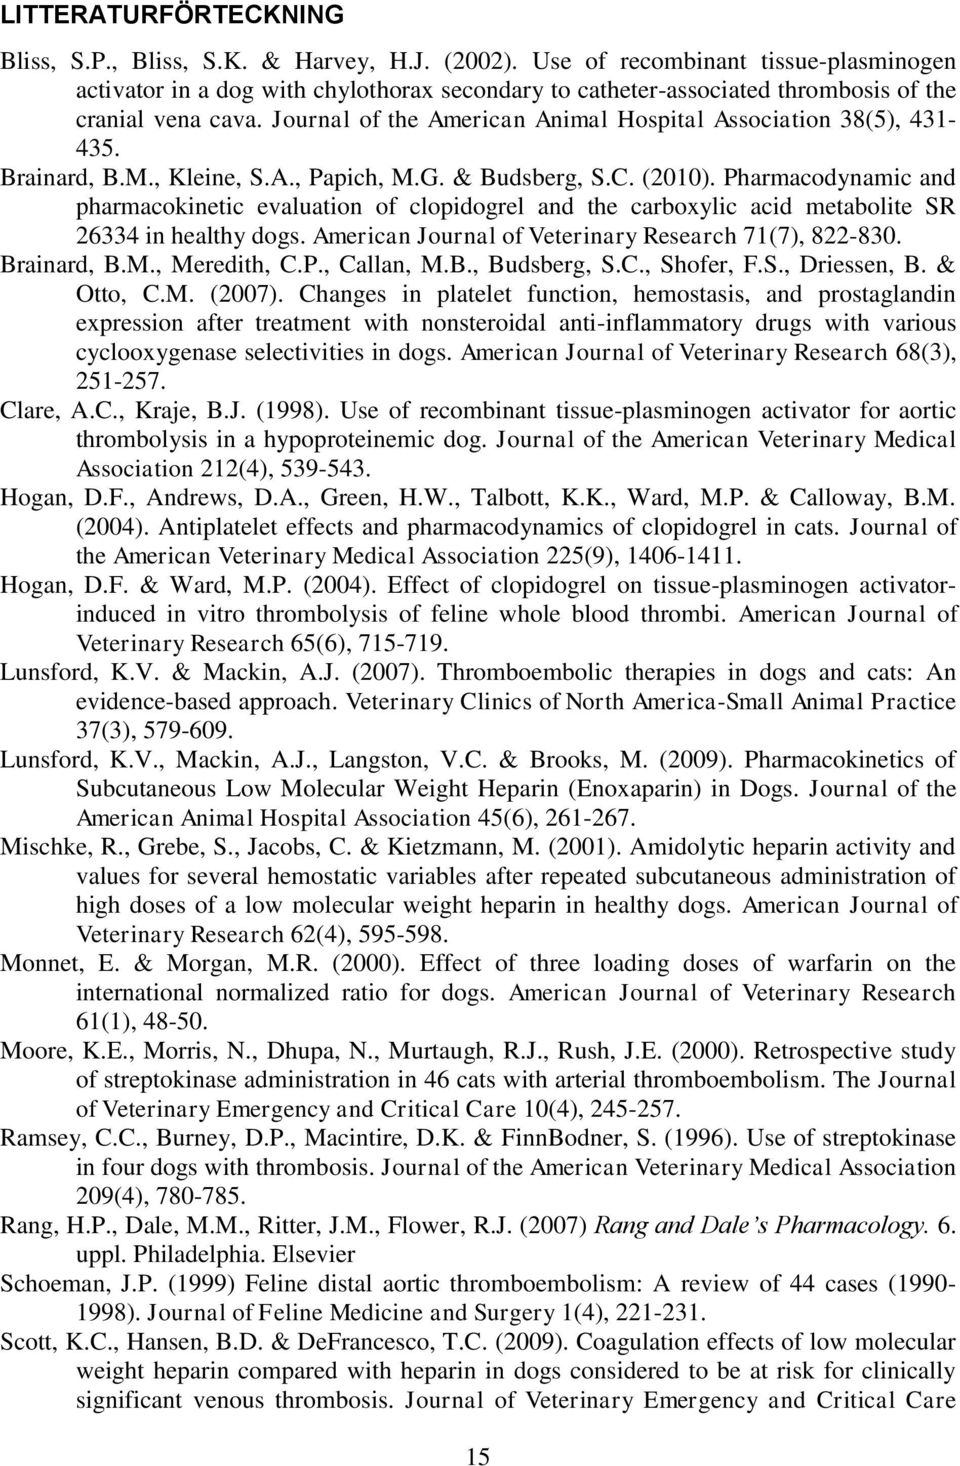 Journal of the American Animal Hospital Association 38(5), 431-435. Brainard, B.M., Kleine, S.A., Papich, M.G. & Budsberg, S.C. (2010).